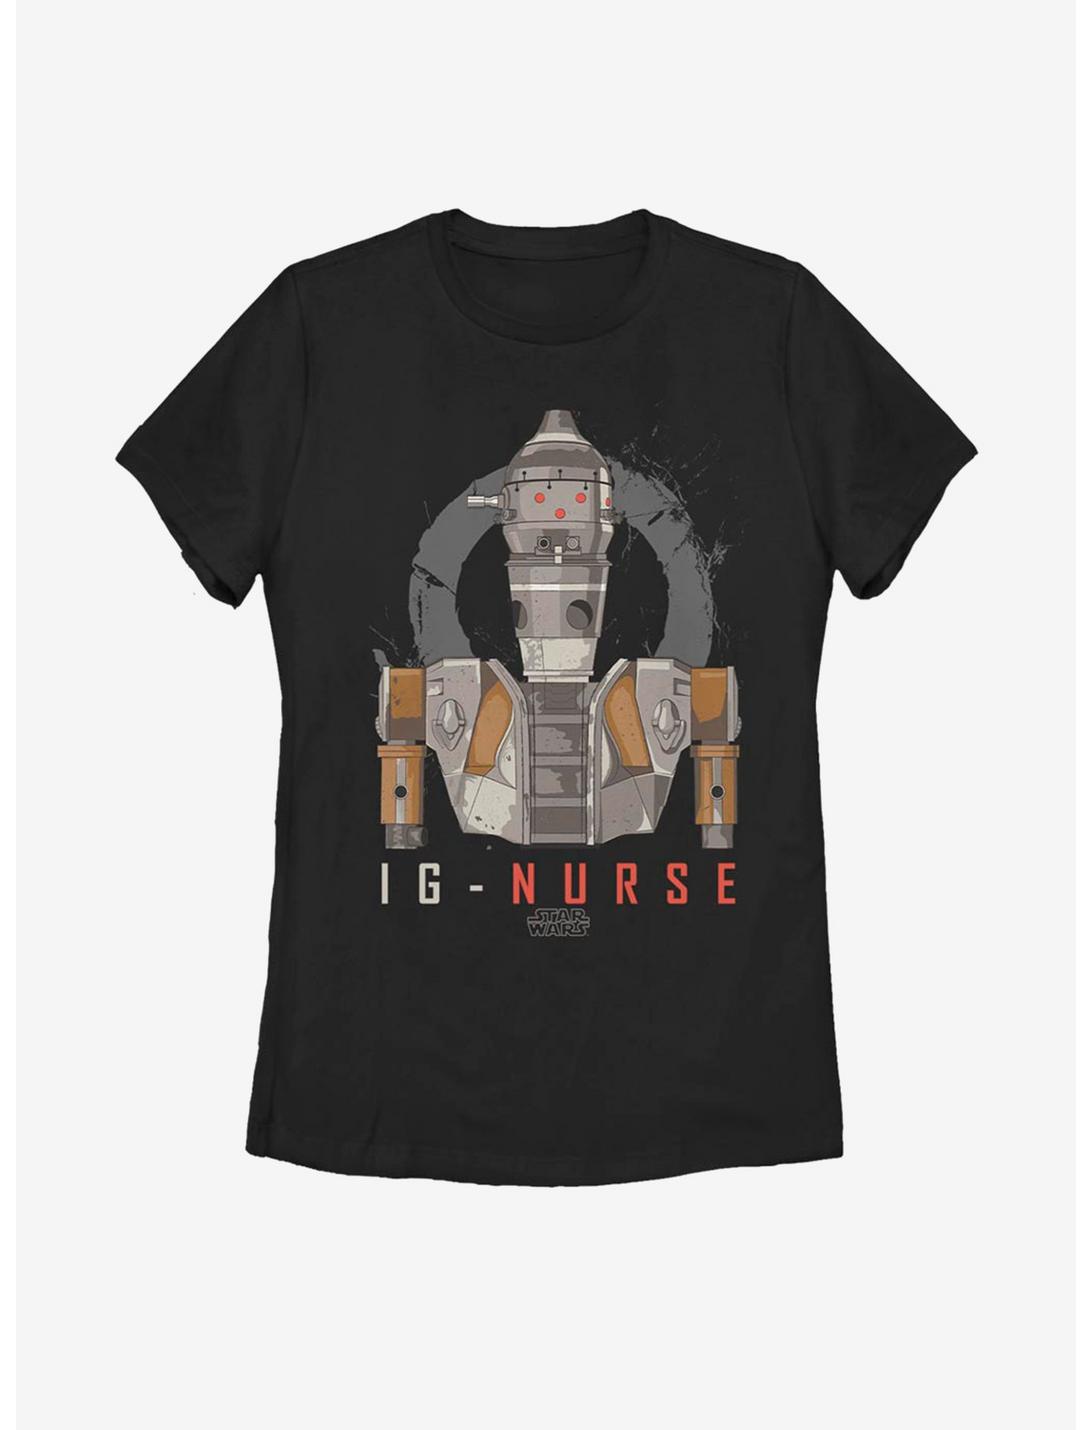 Star Wars The Mandalorian The Child IG - Nurse Womens T-Shirt, BLACK, hi-res